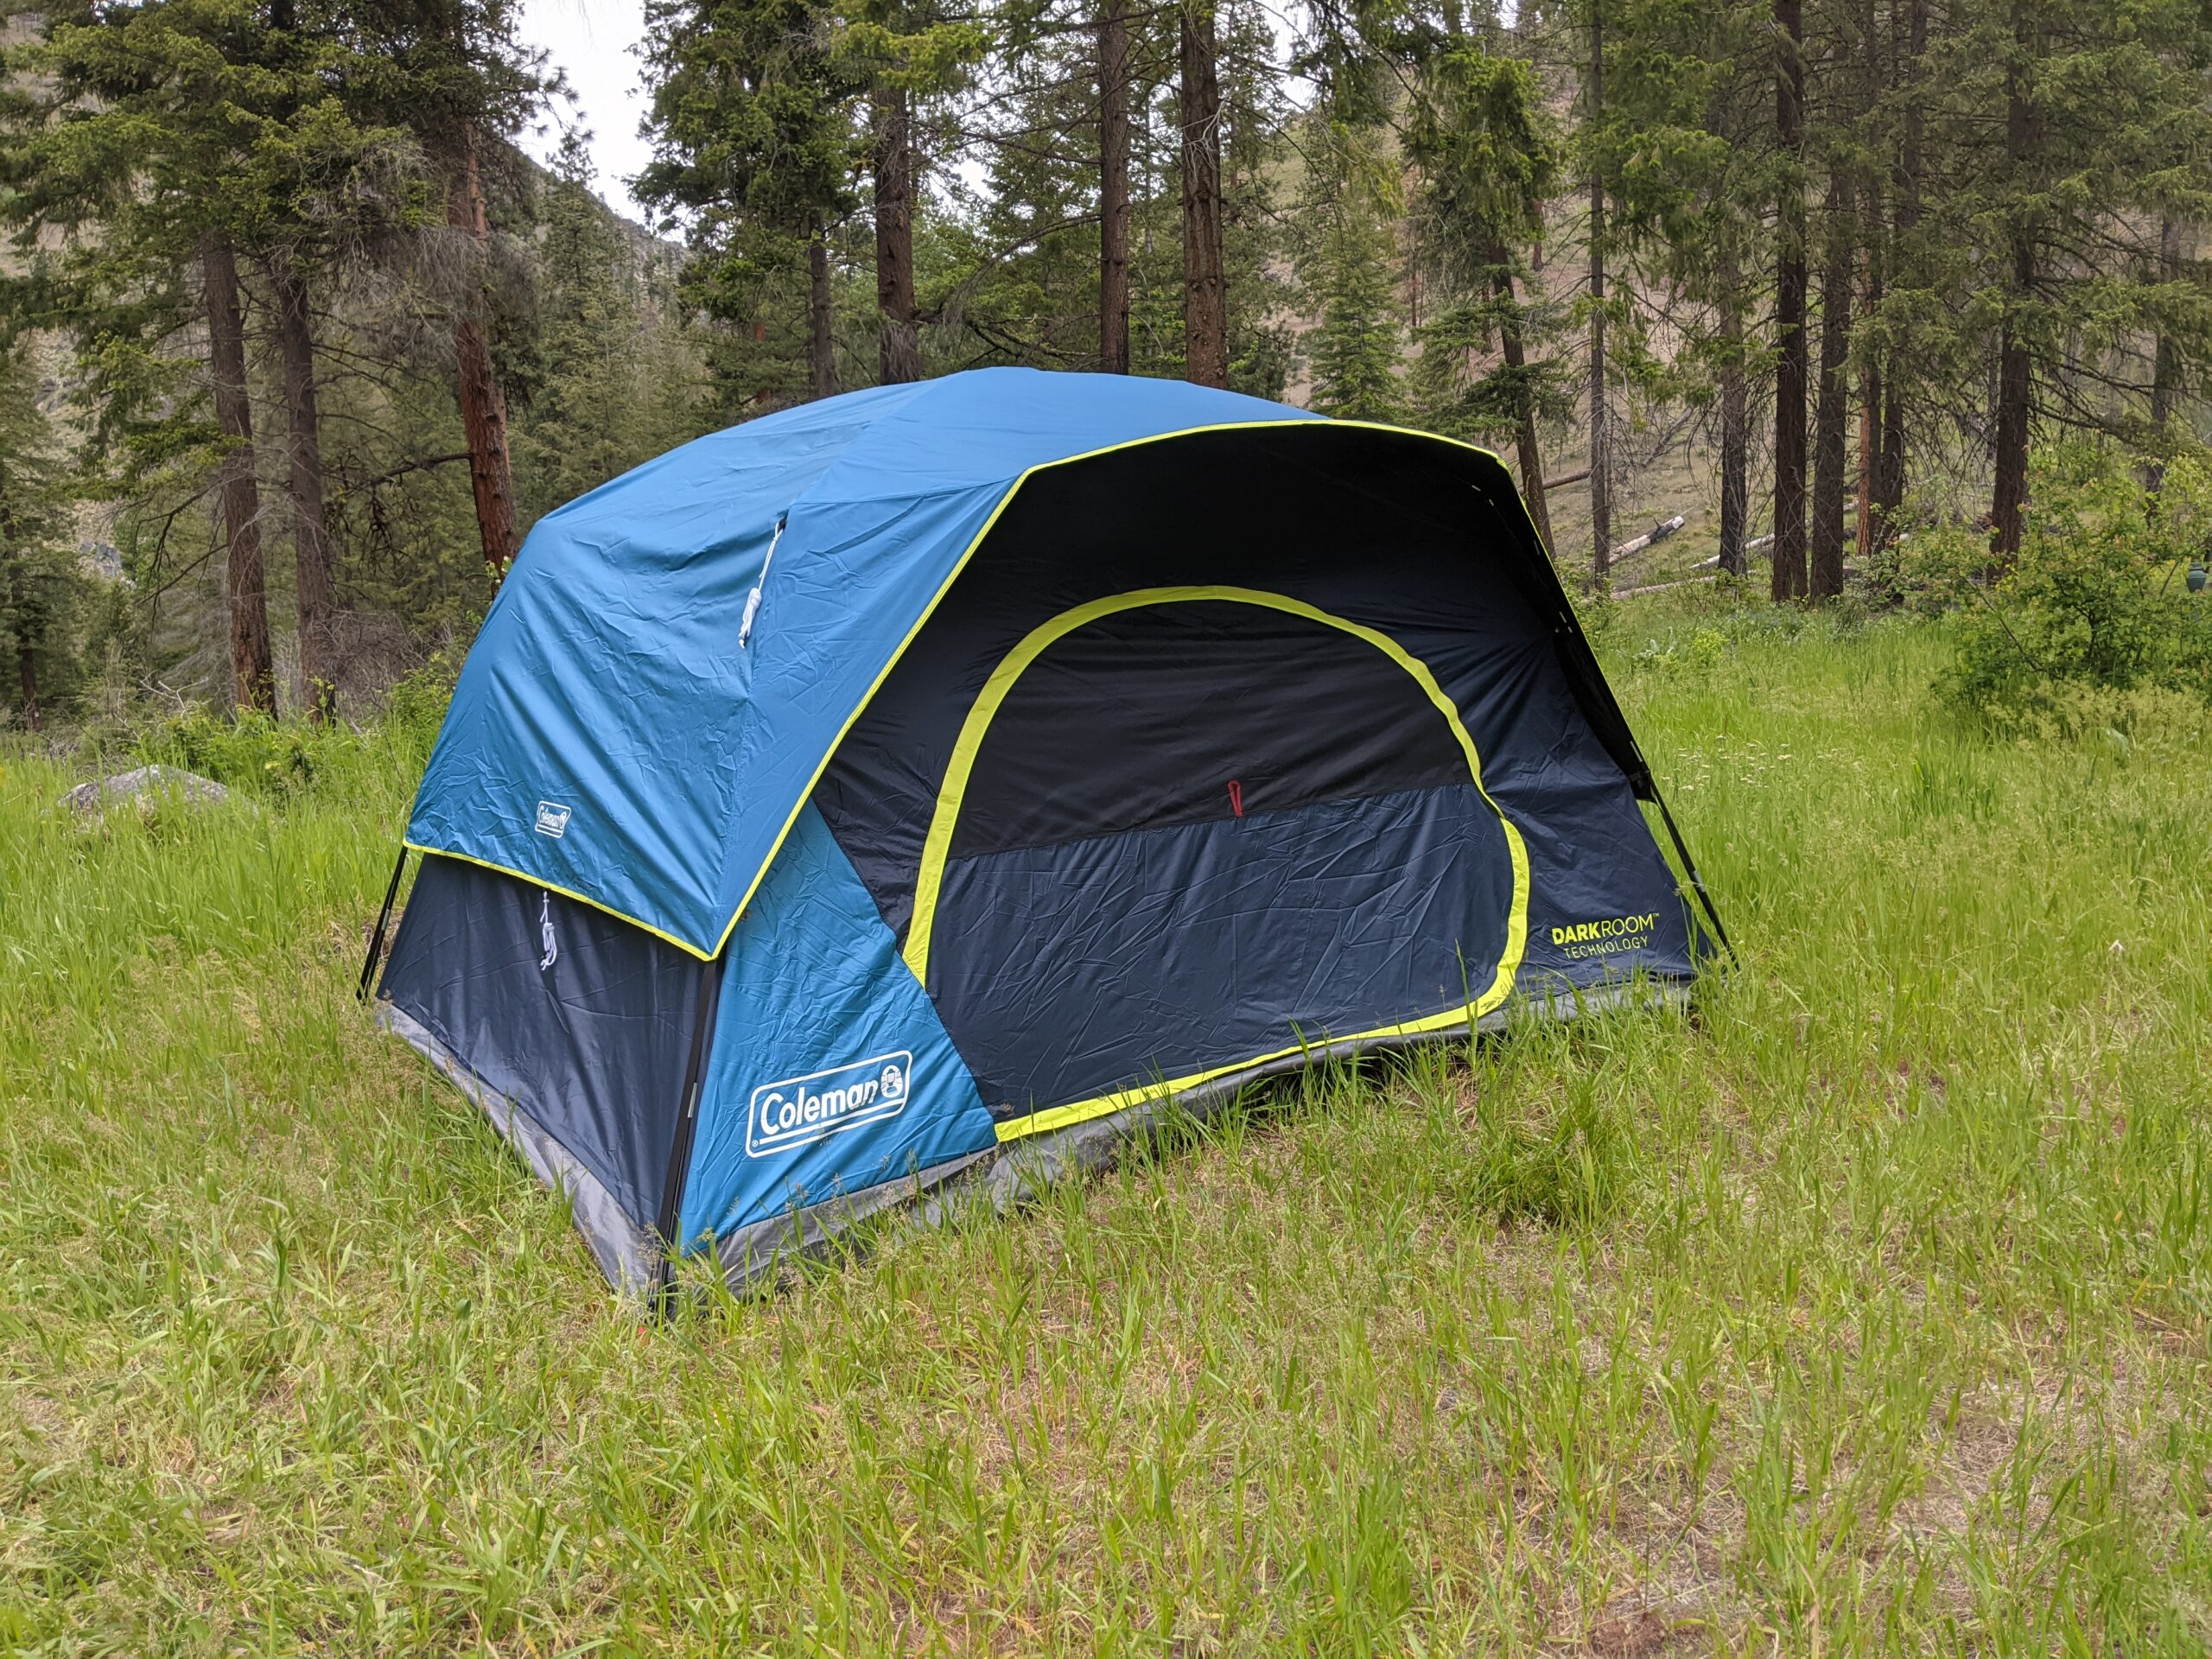 Coleman tent setup